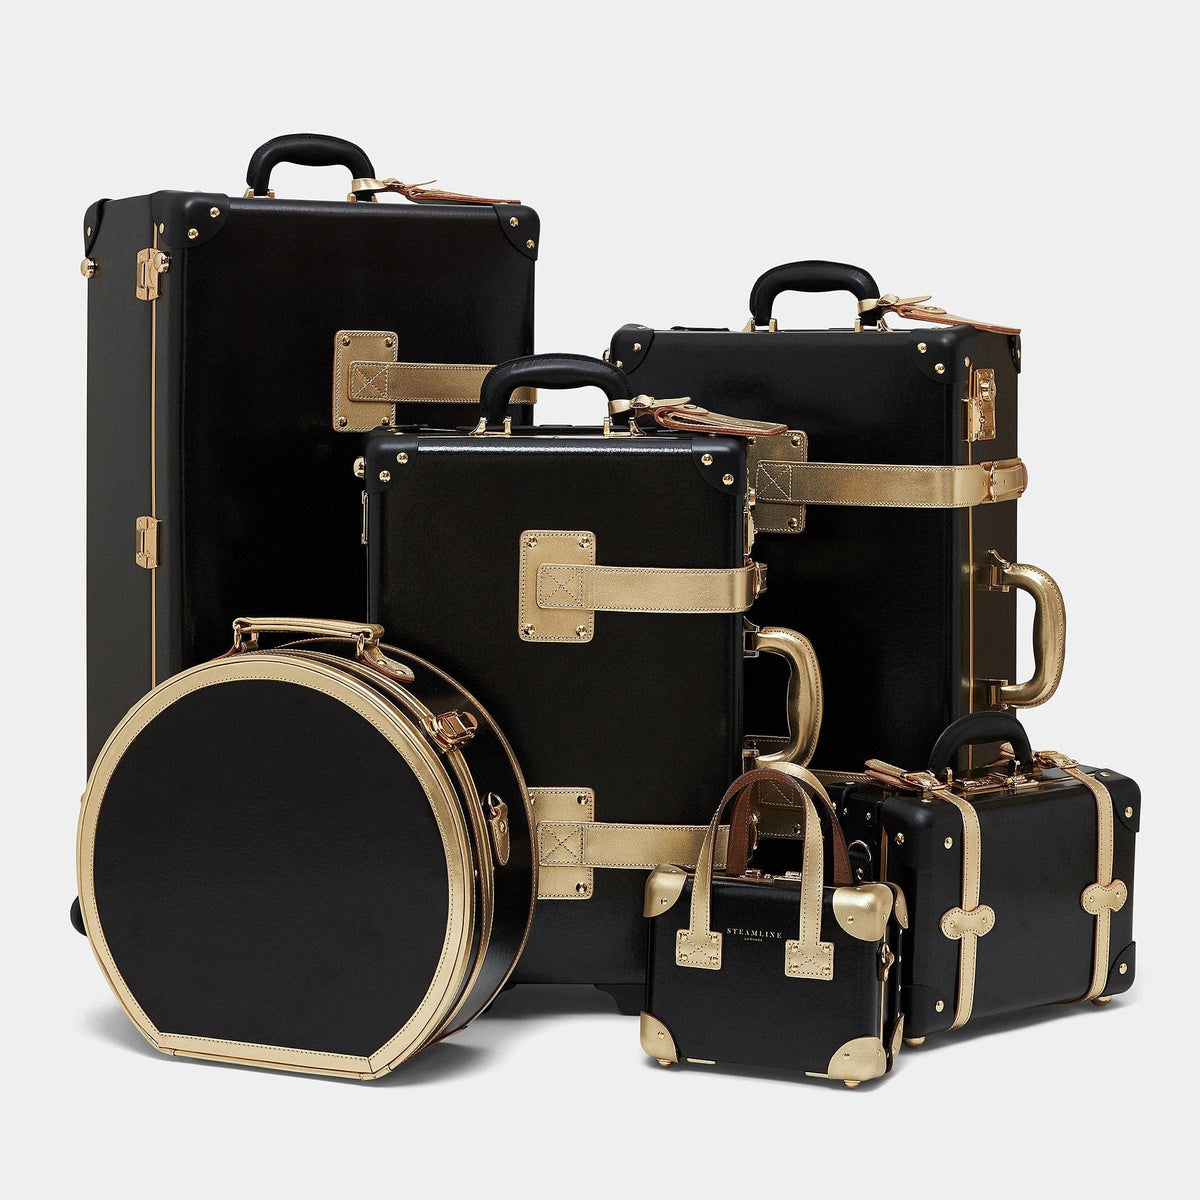 The Soprano - Black Hatbox Large Hatbox Large Steamline Luggage 